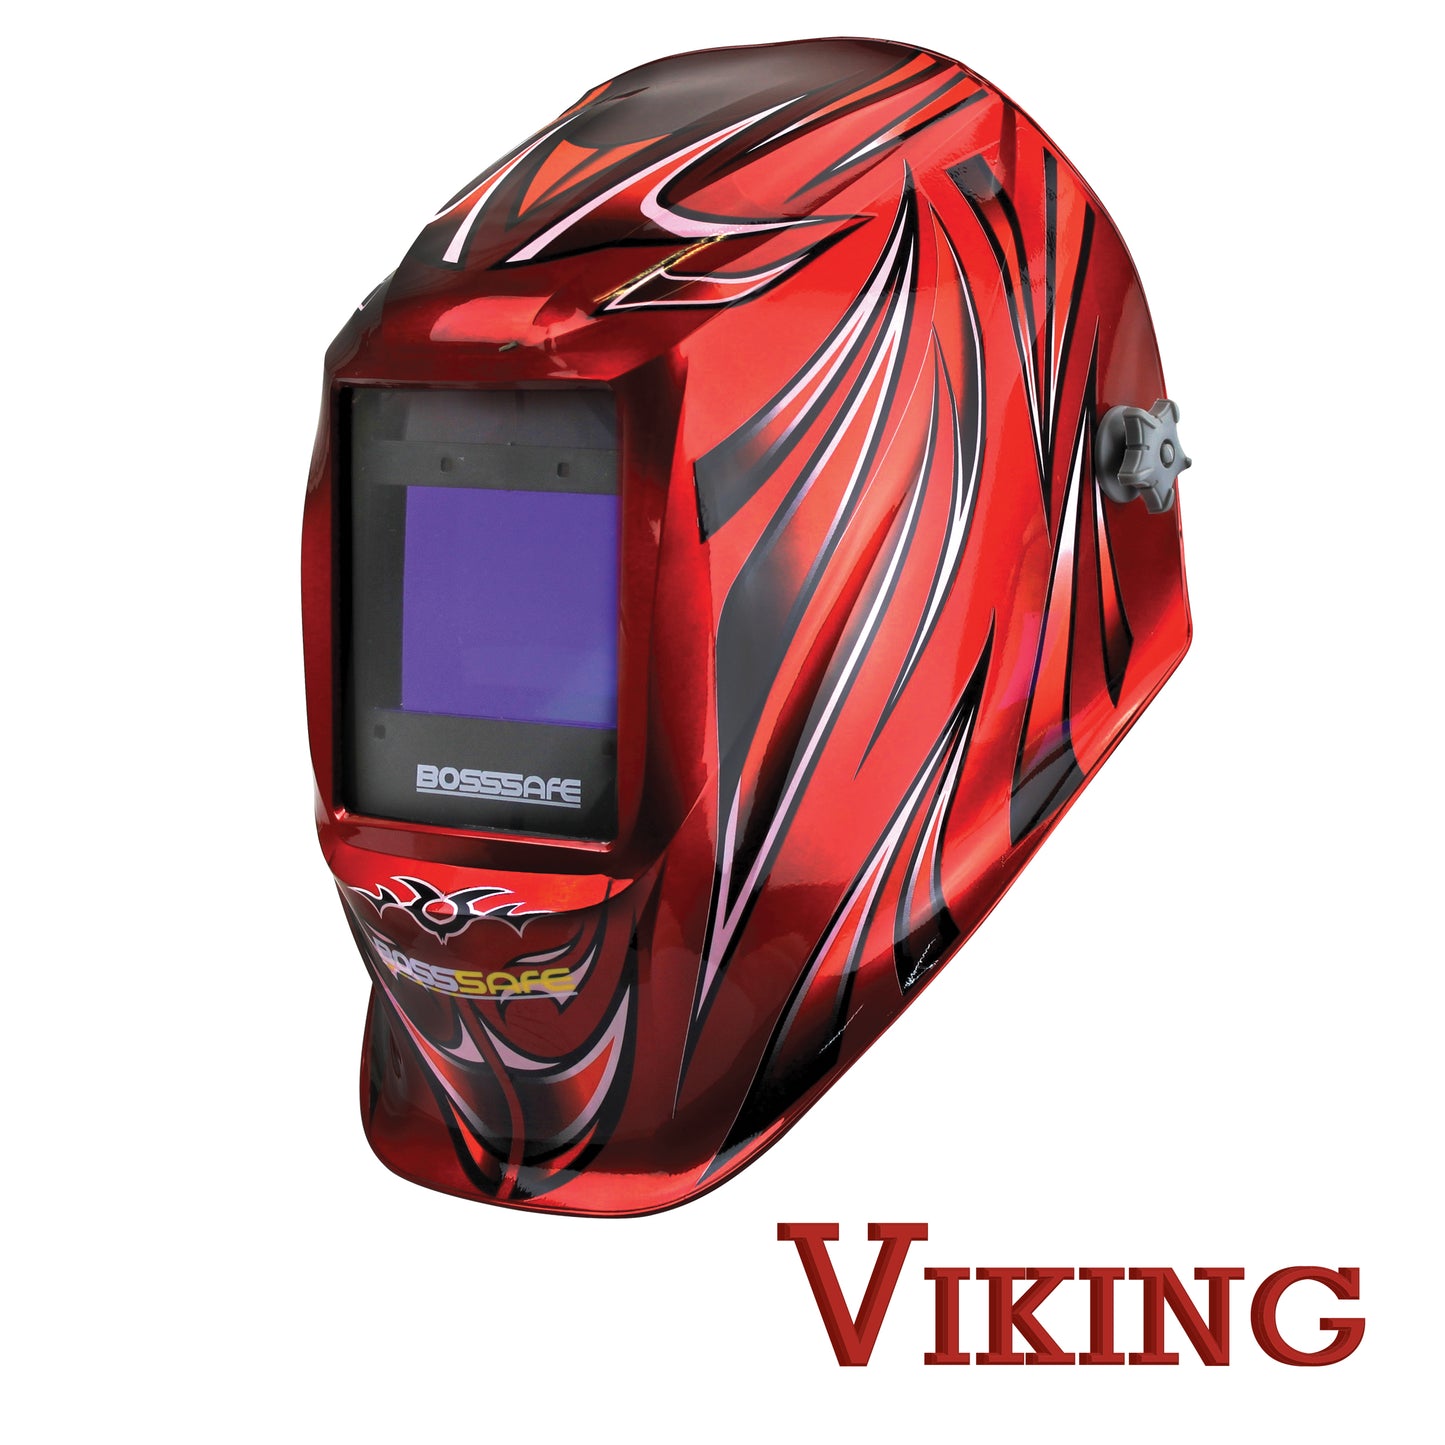 BossSafe Pro Series Electronic Welding Helmet